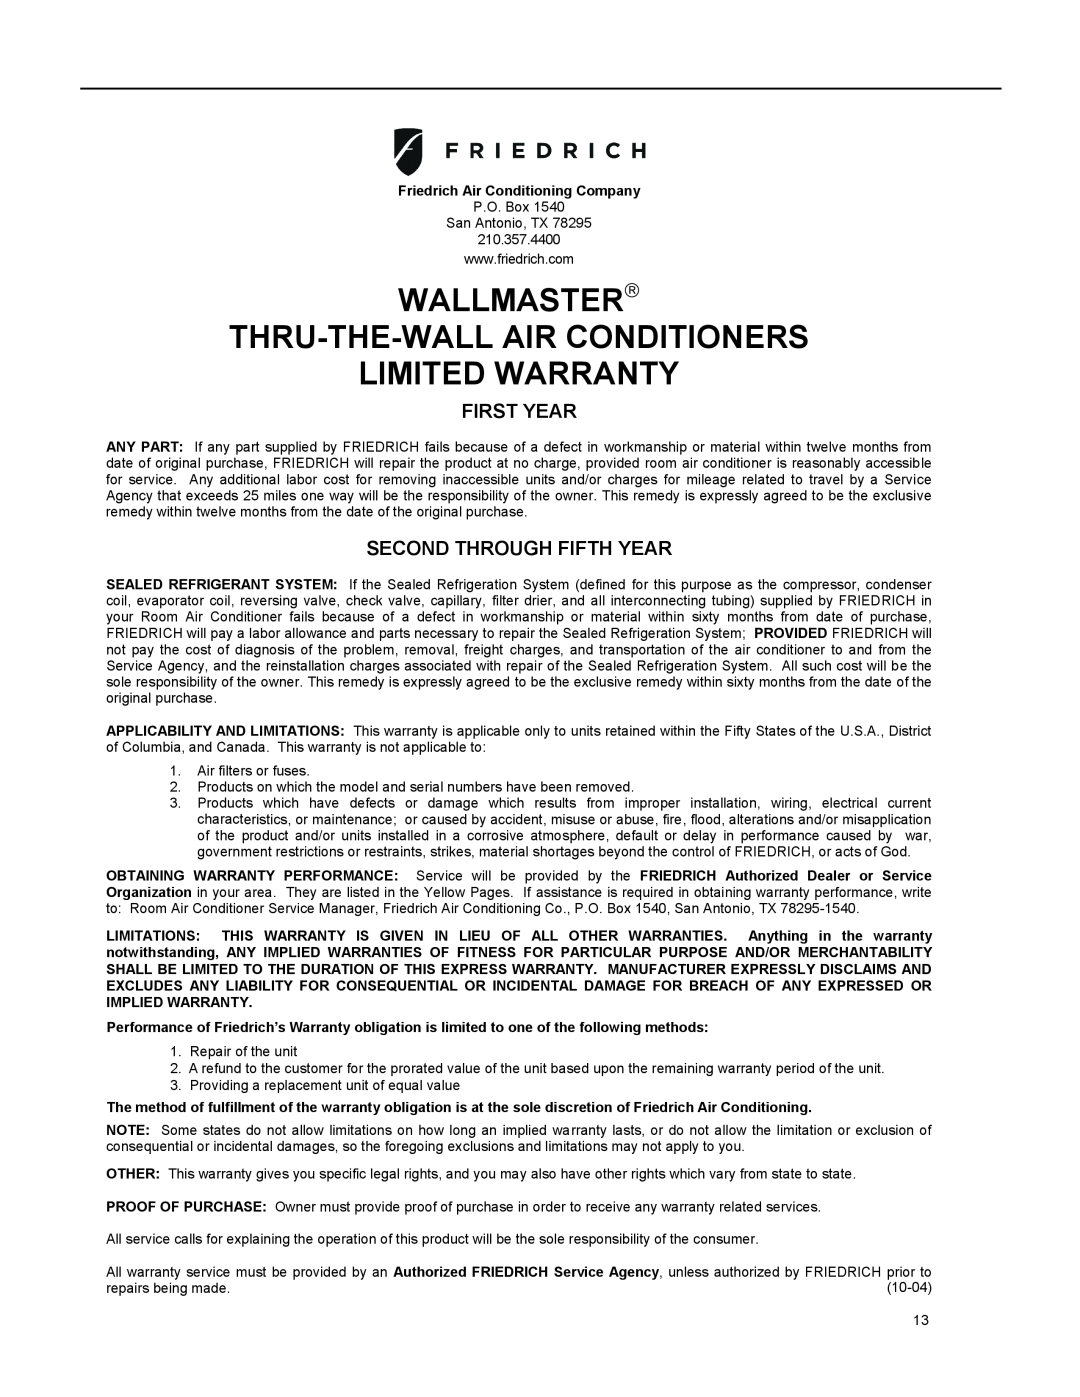 Friedrich WS15, WE15 Wallmaster Thru-The-Wallair Conditioners, Limited Warranty, First Year, Second Through Fifth Year 